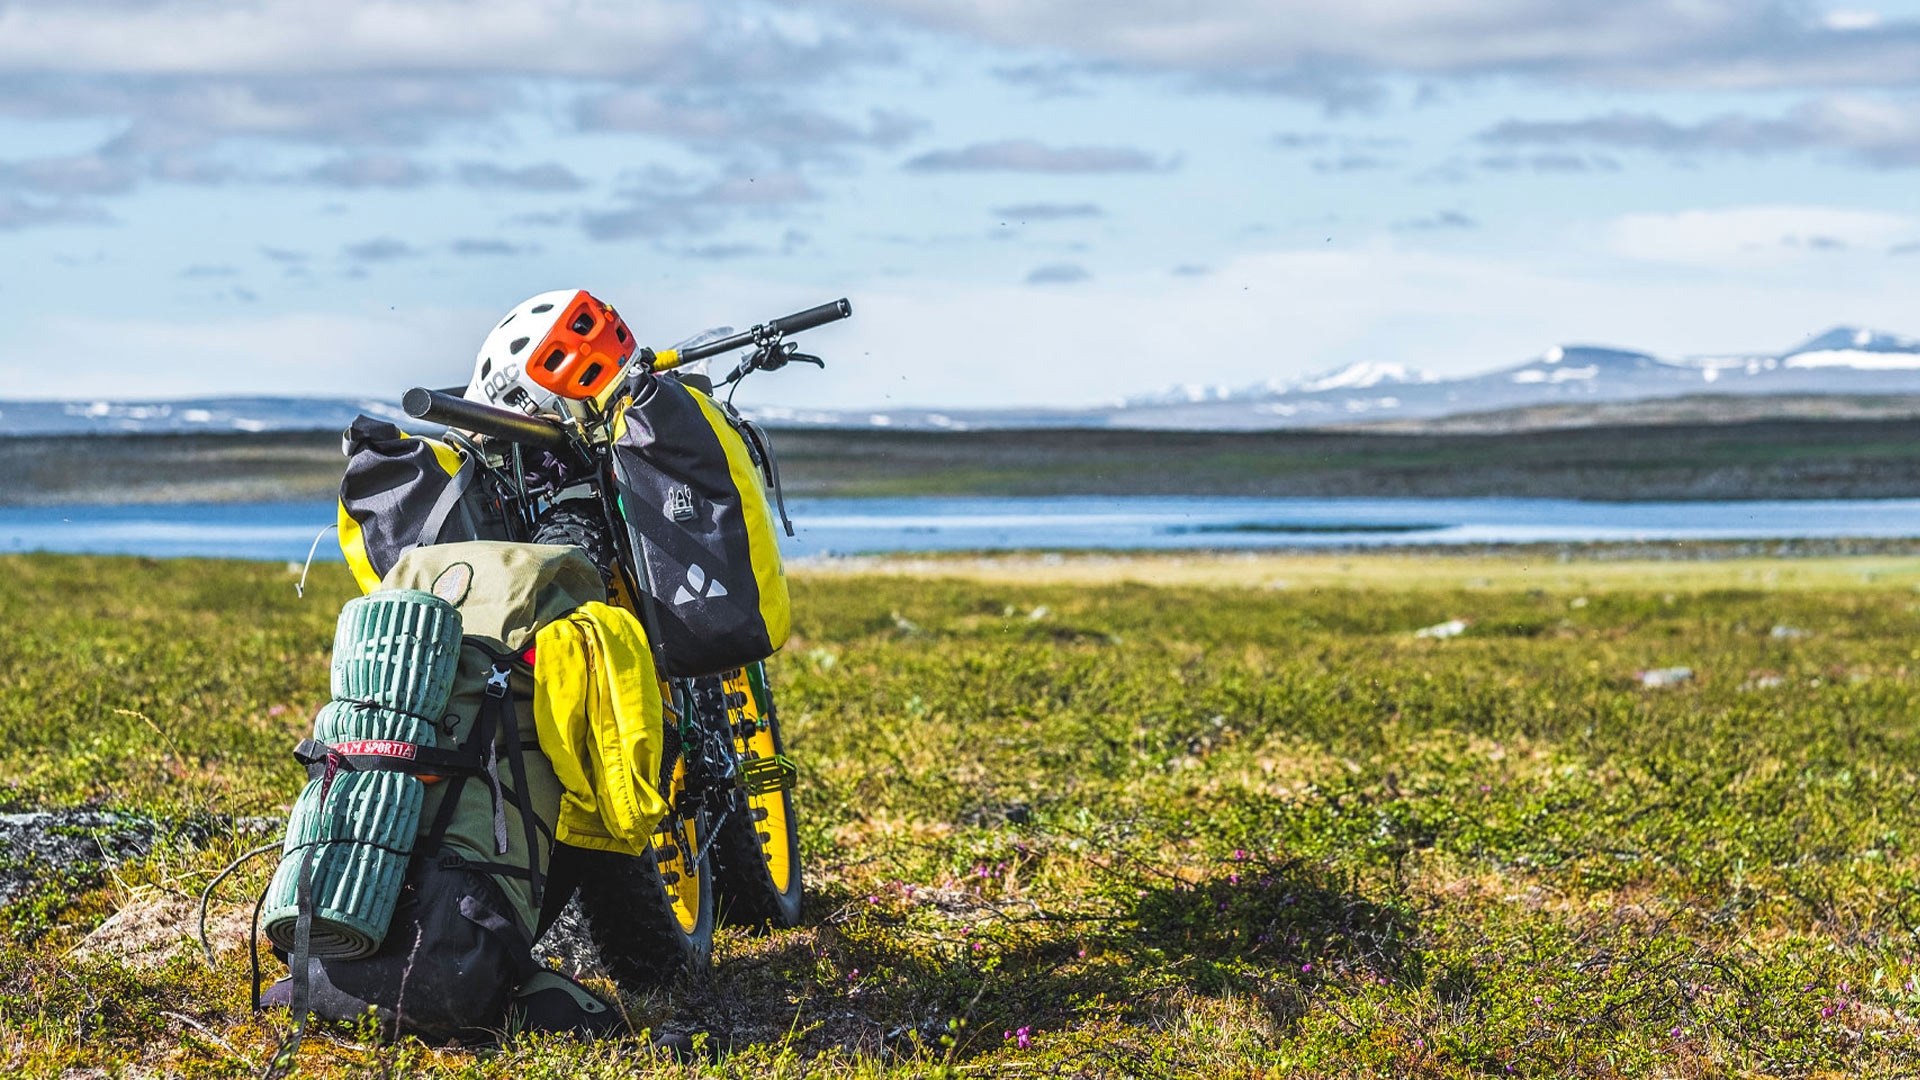 Fly fishing and fat biking in Sandåslandet – Swedish Lapland